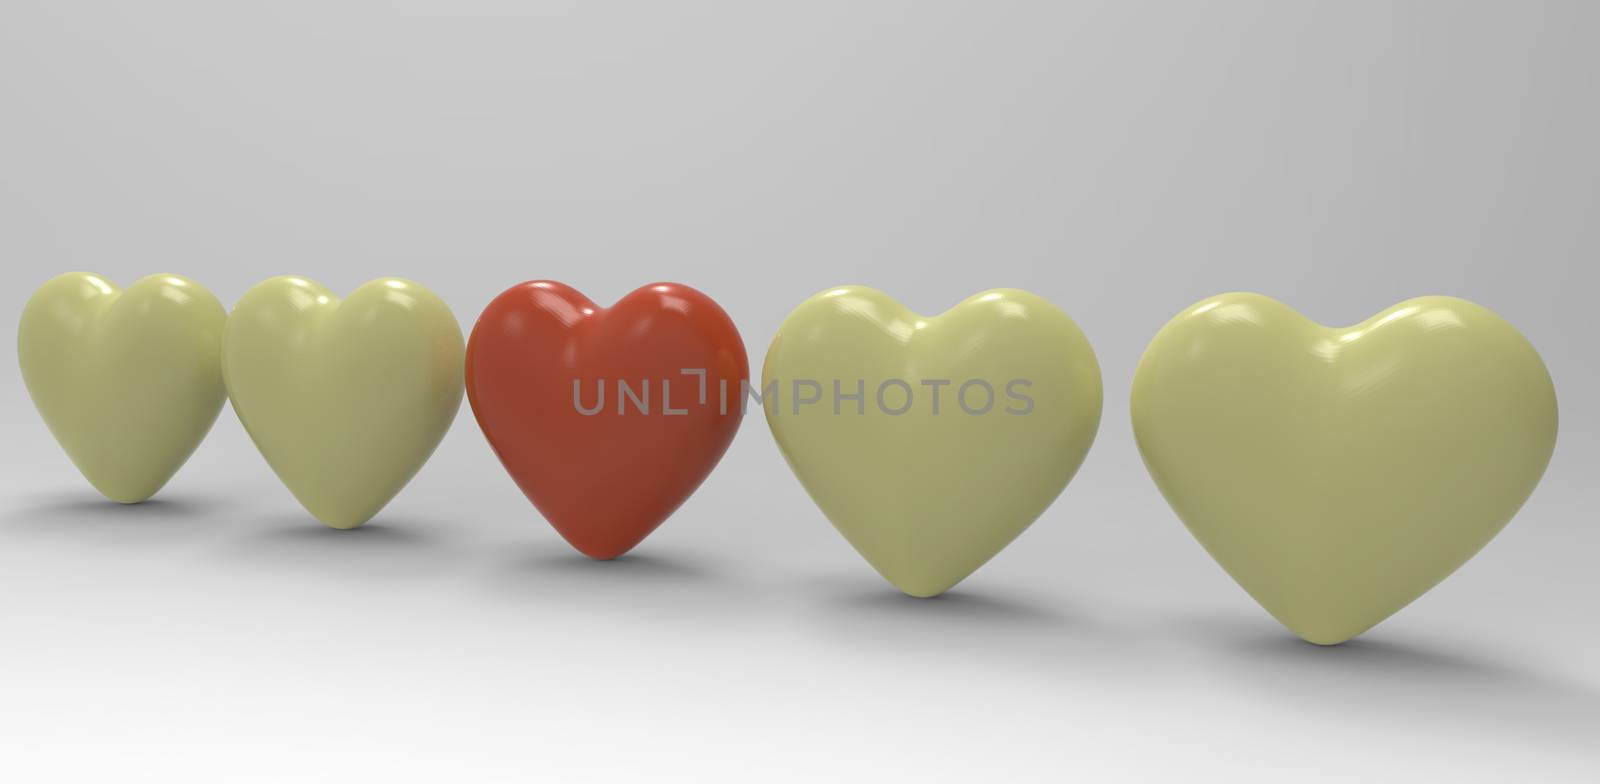 unique heart concept, different valentine